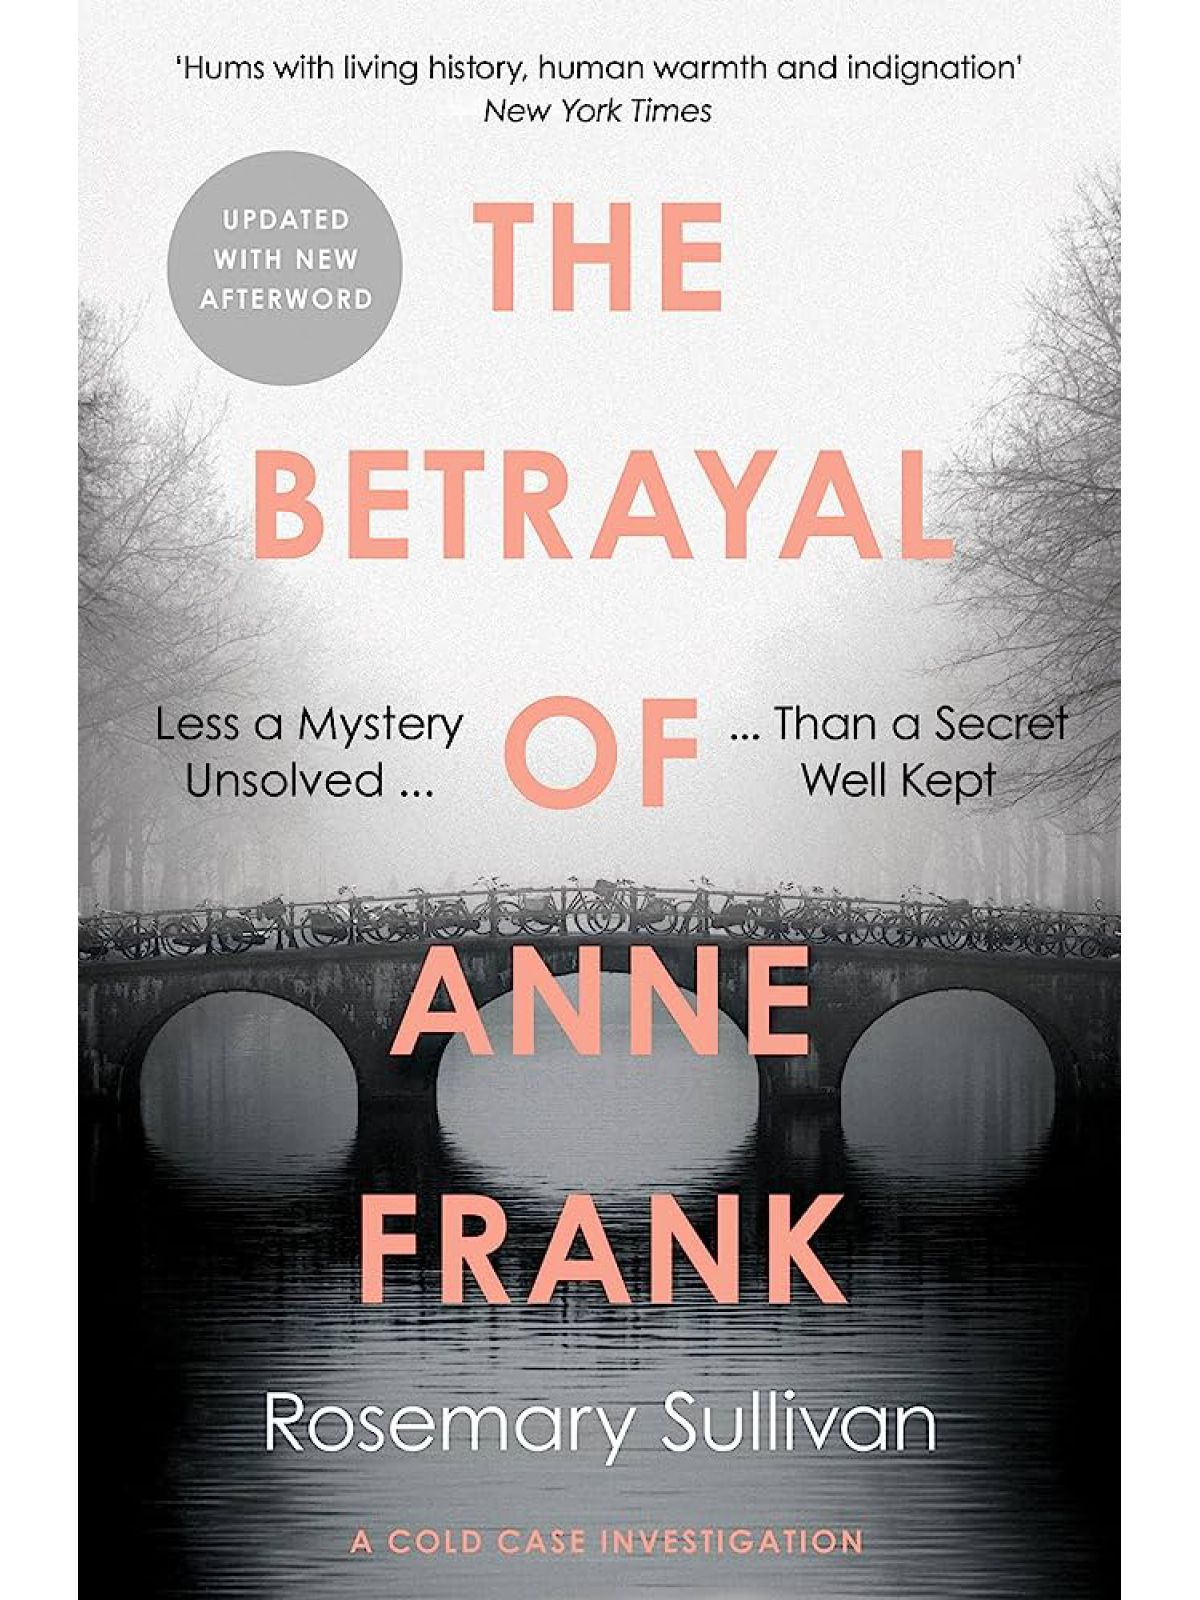 BETRAYAL OF ANNE FRANK